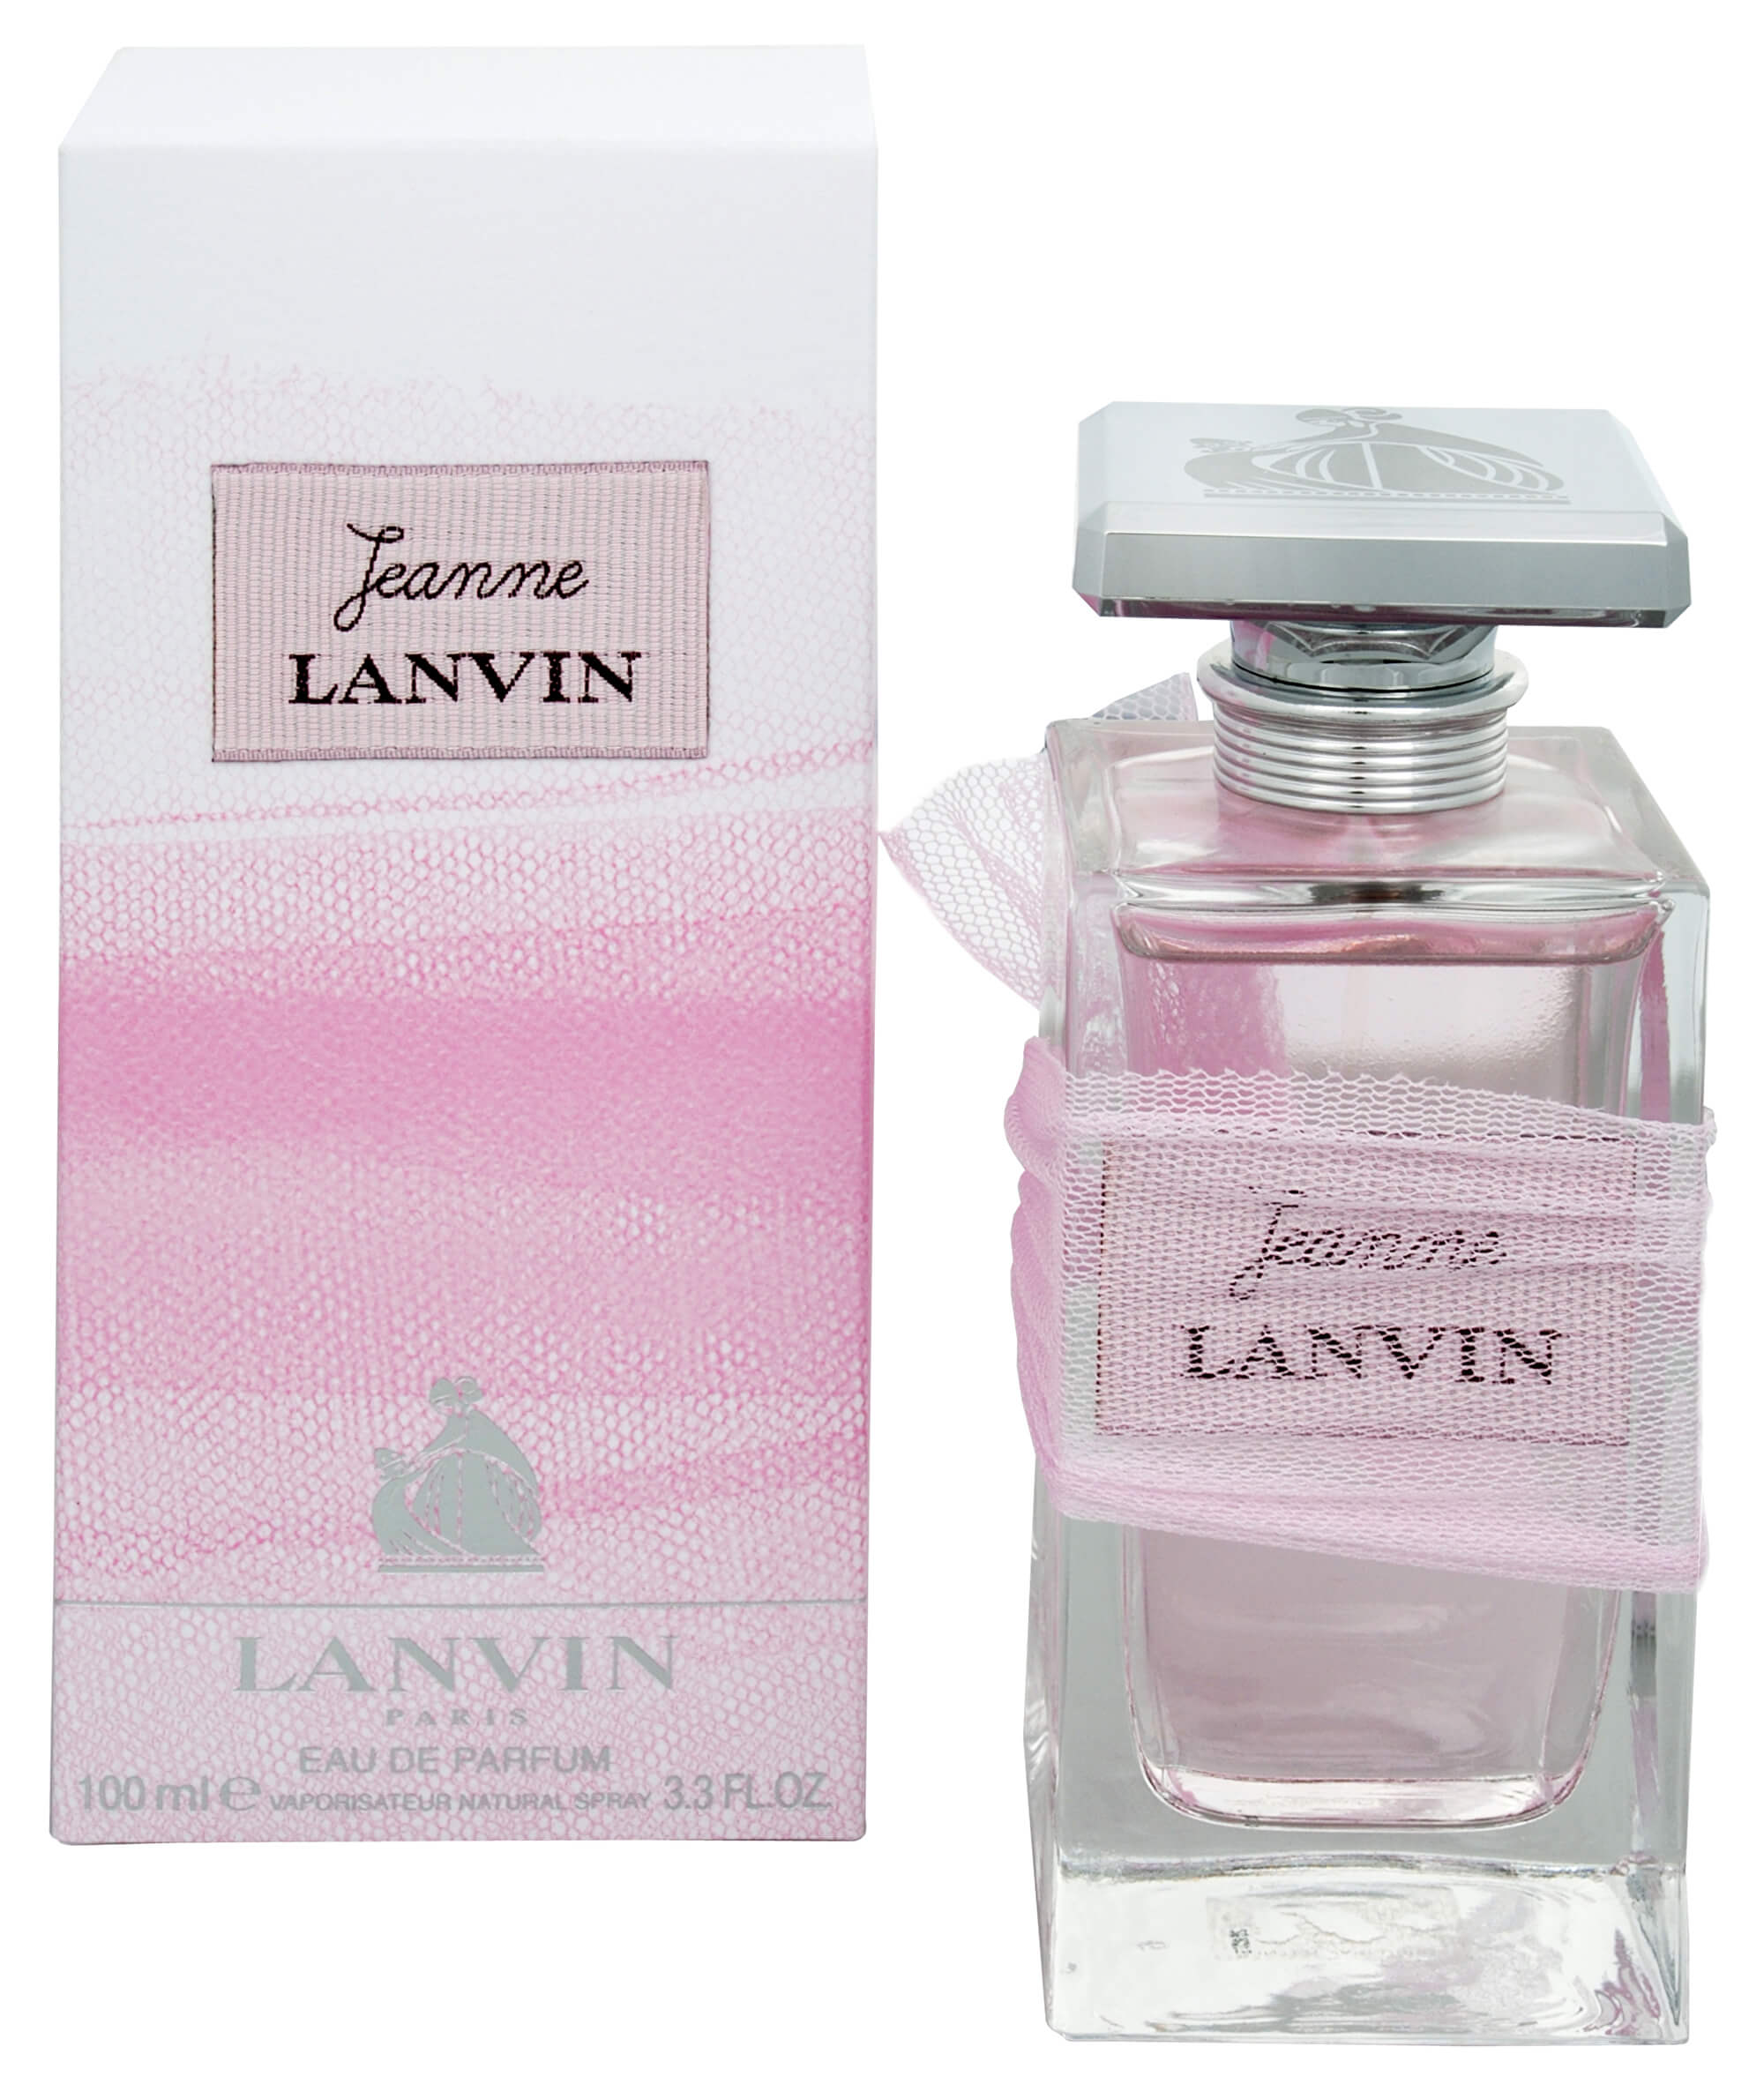 Lanvin Jeanne Lanvin - EDP 30 ml